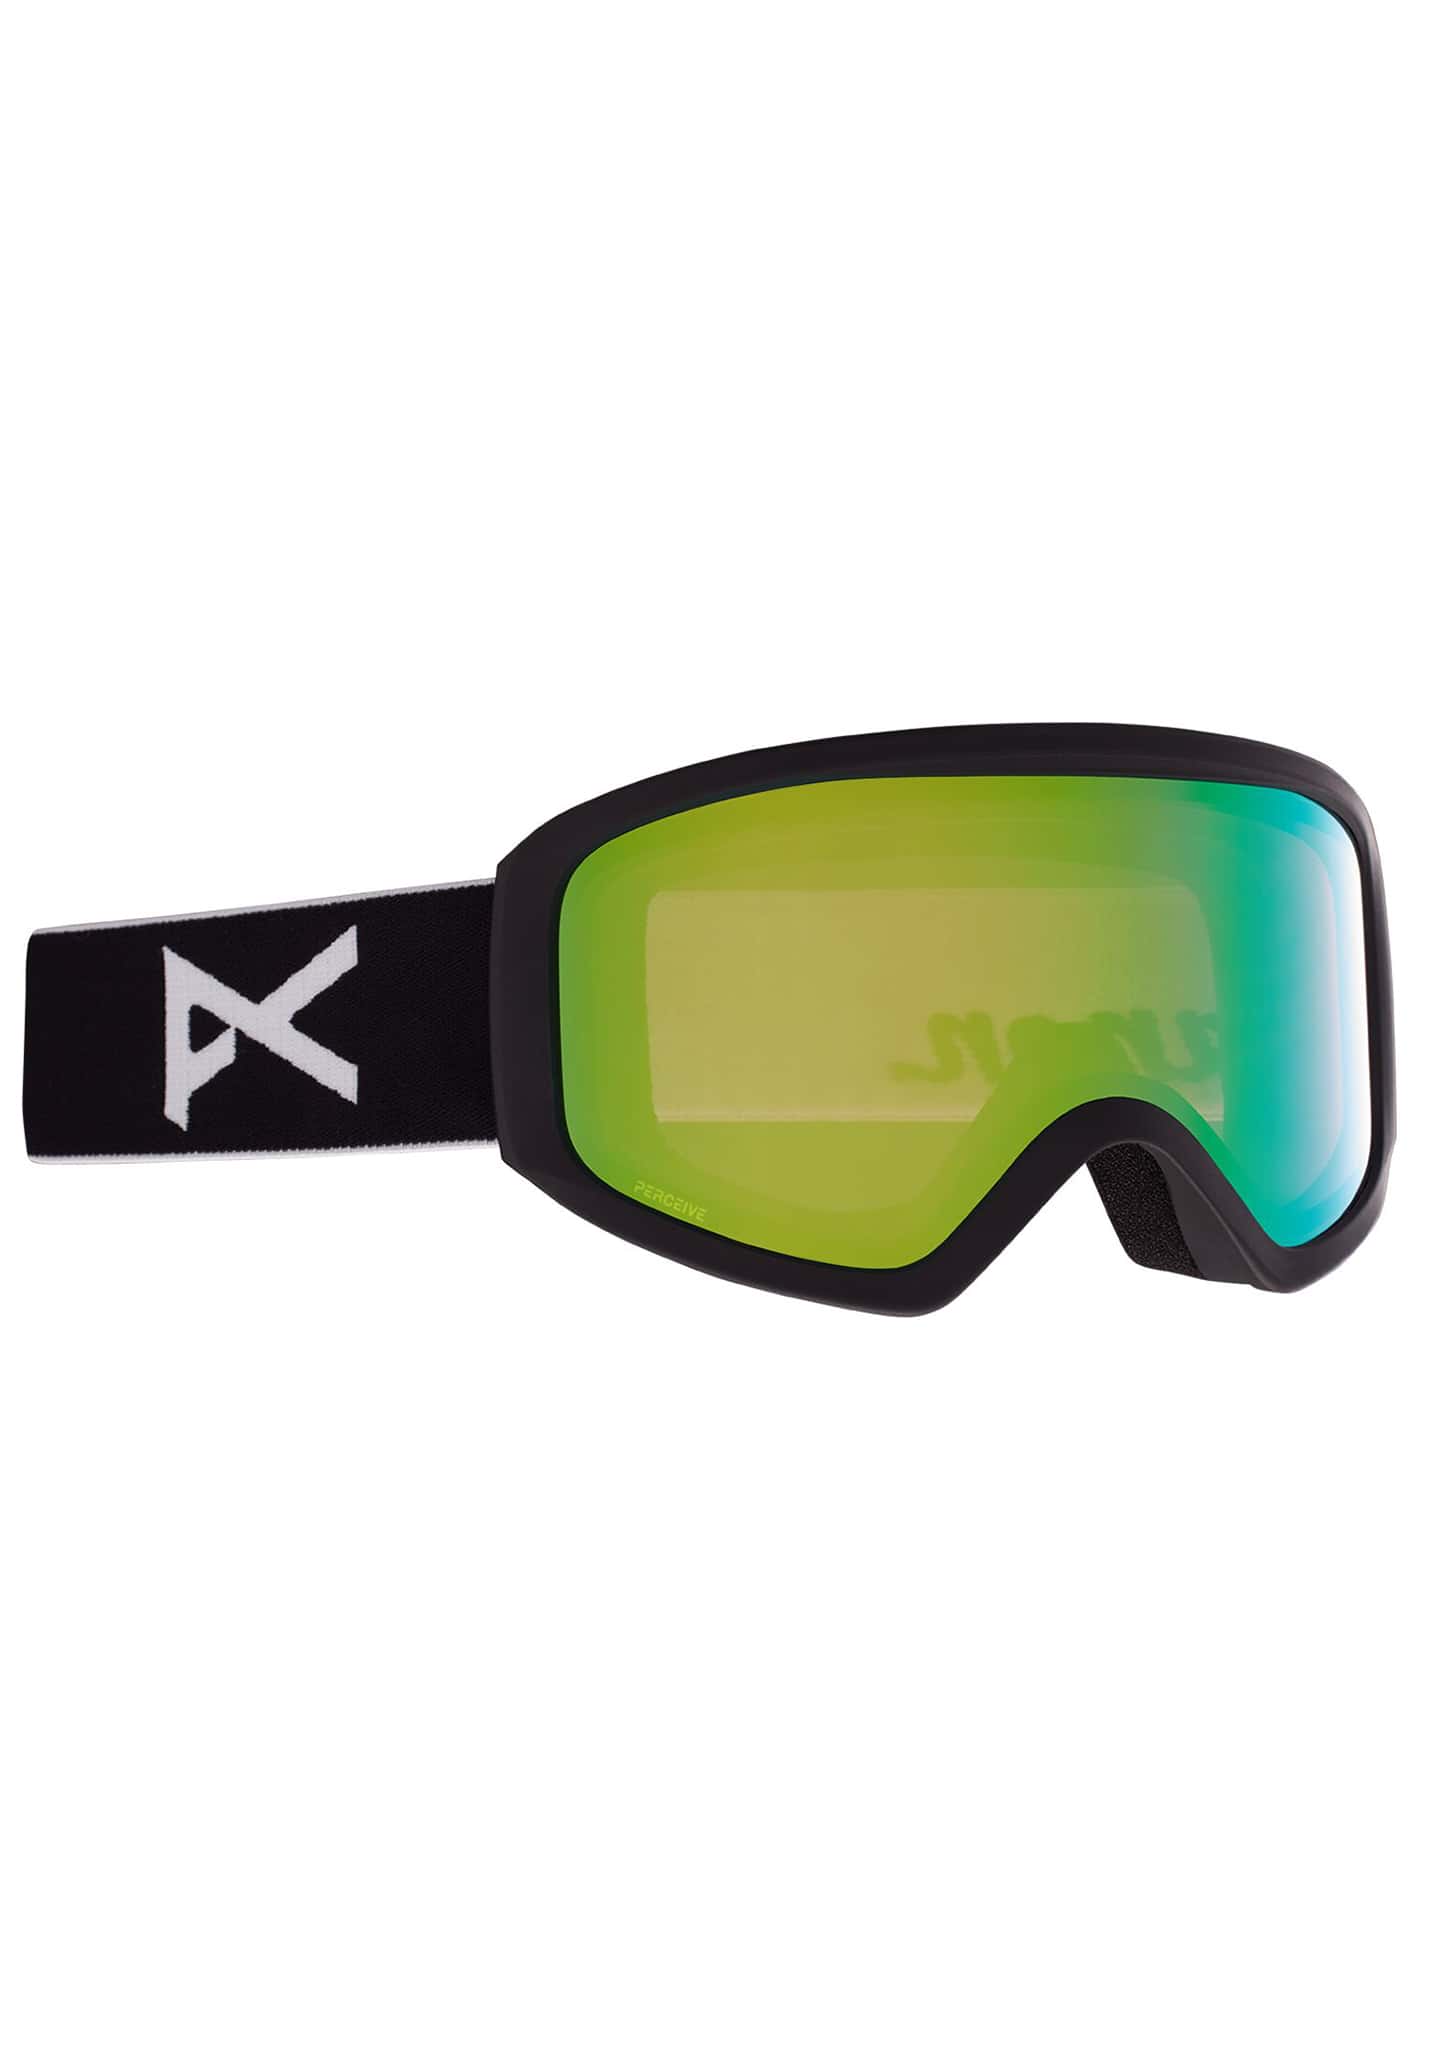 Anon Insight Snowboardbrillen schwarz/prcv vrbl grn One Size